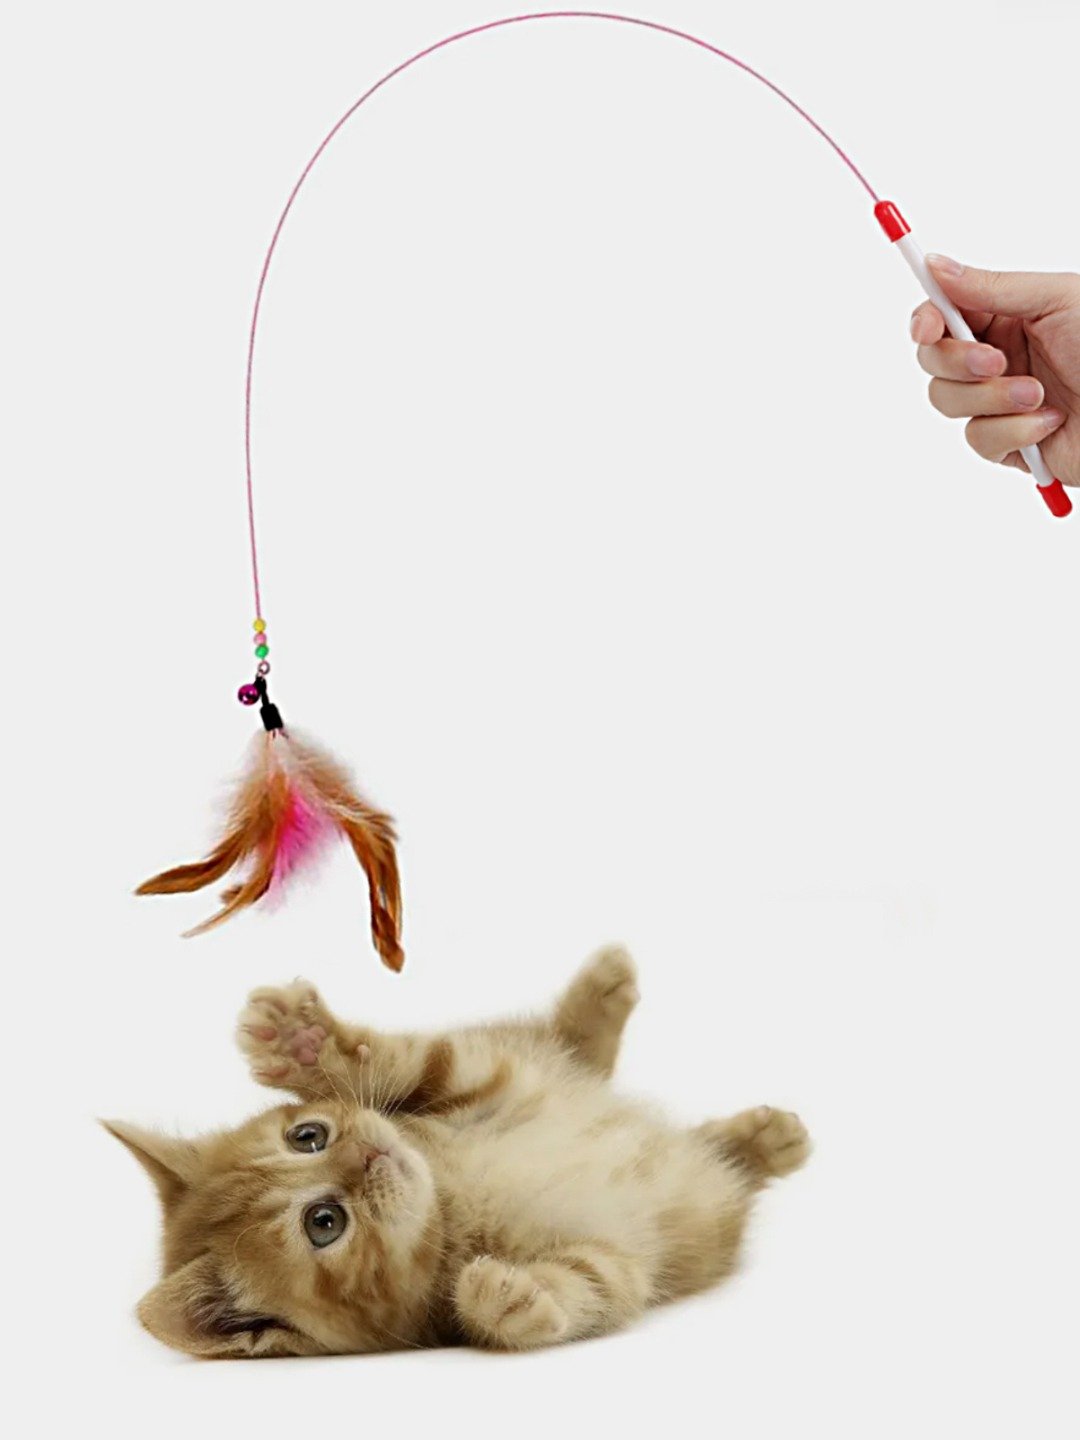 Игрушка-дразнилка с мататаби для кошек в виде хрустящей рыбки.